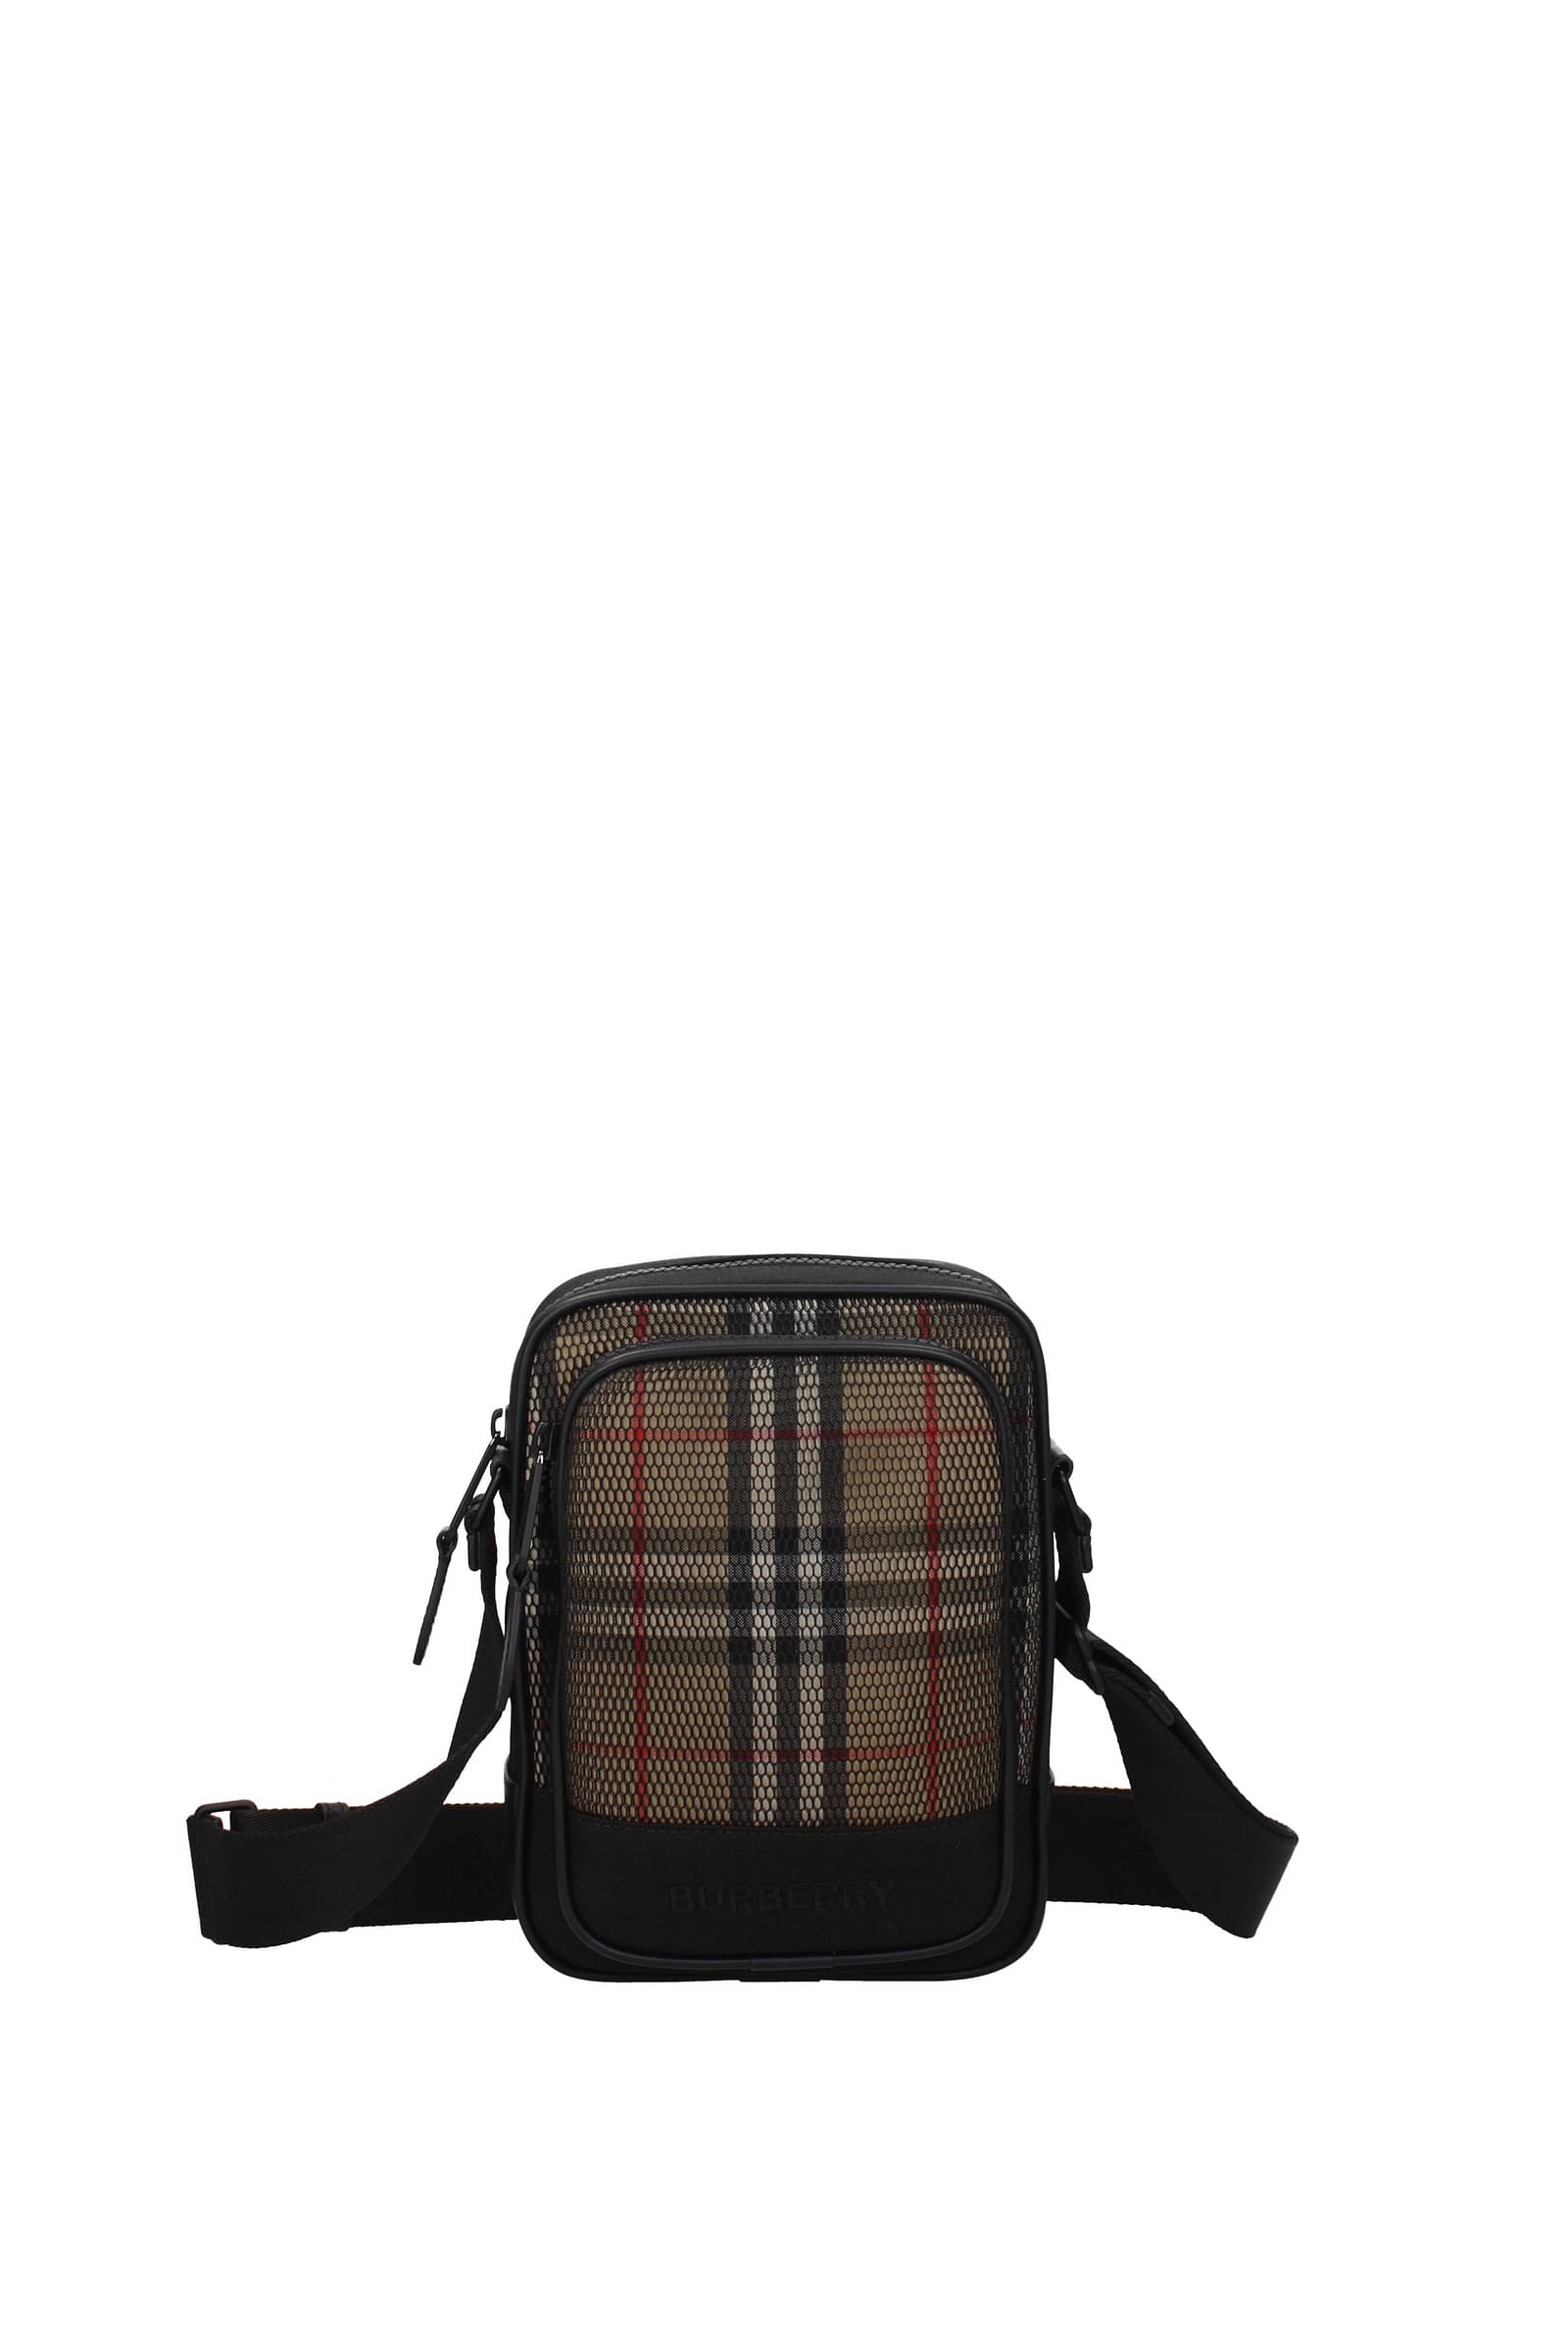 NEW Bottega Veneta Intrecciato Leather Zip Around Crossbody Bag Messenger  BLACK | eBay